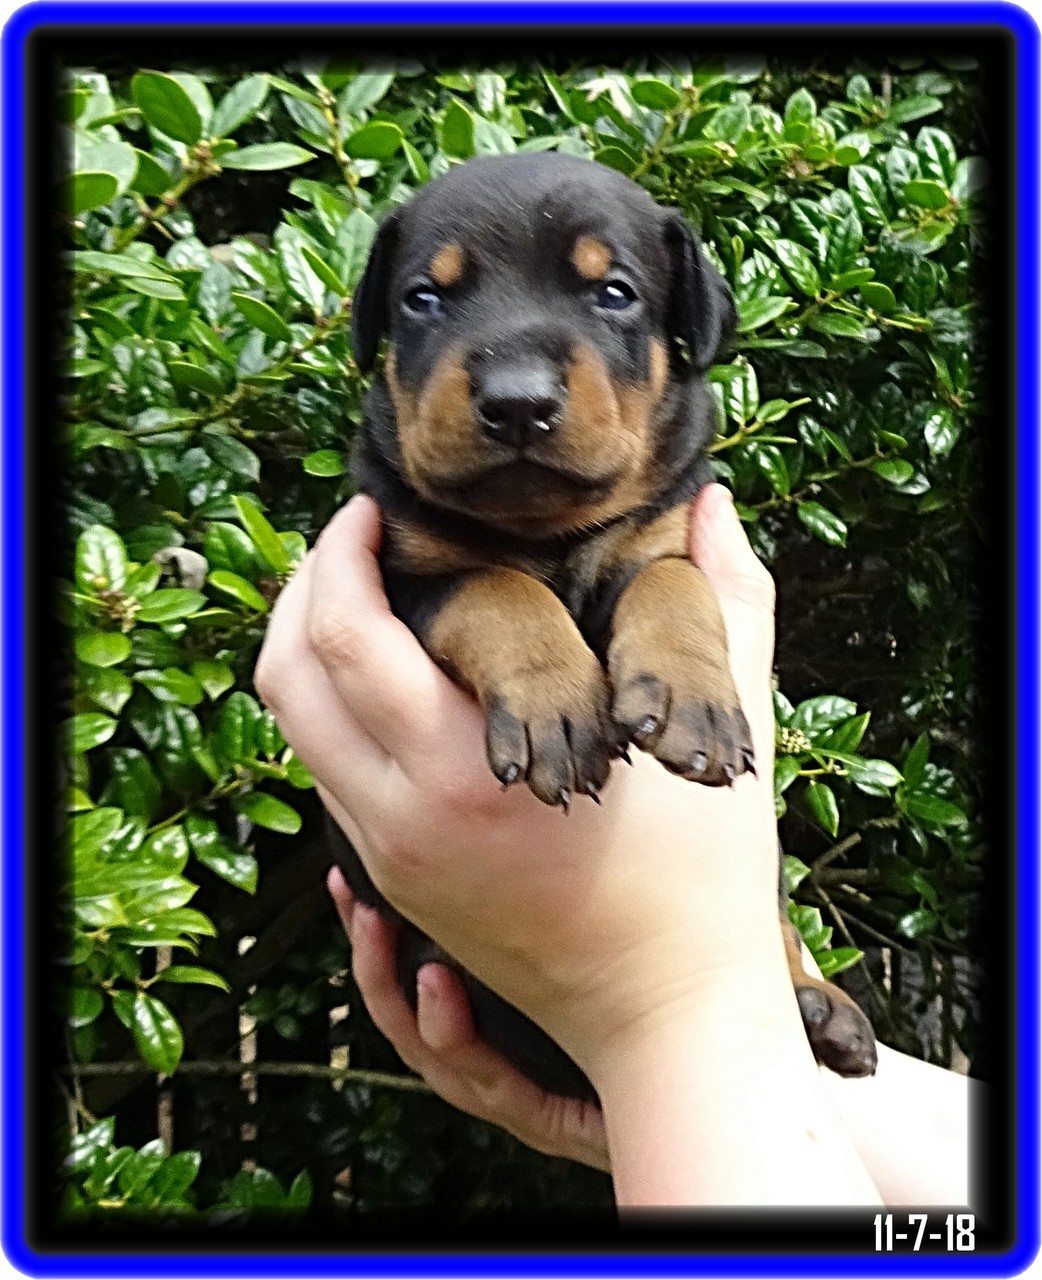 Skona ... Miska & Kodiak pup born 10-20-18... now at home in Kingsport TN